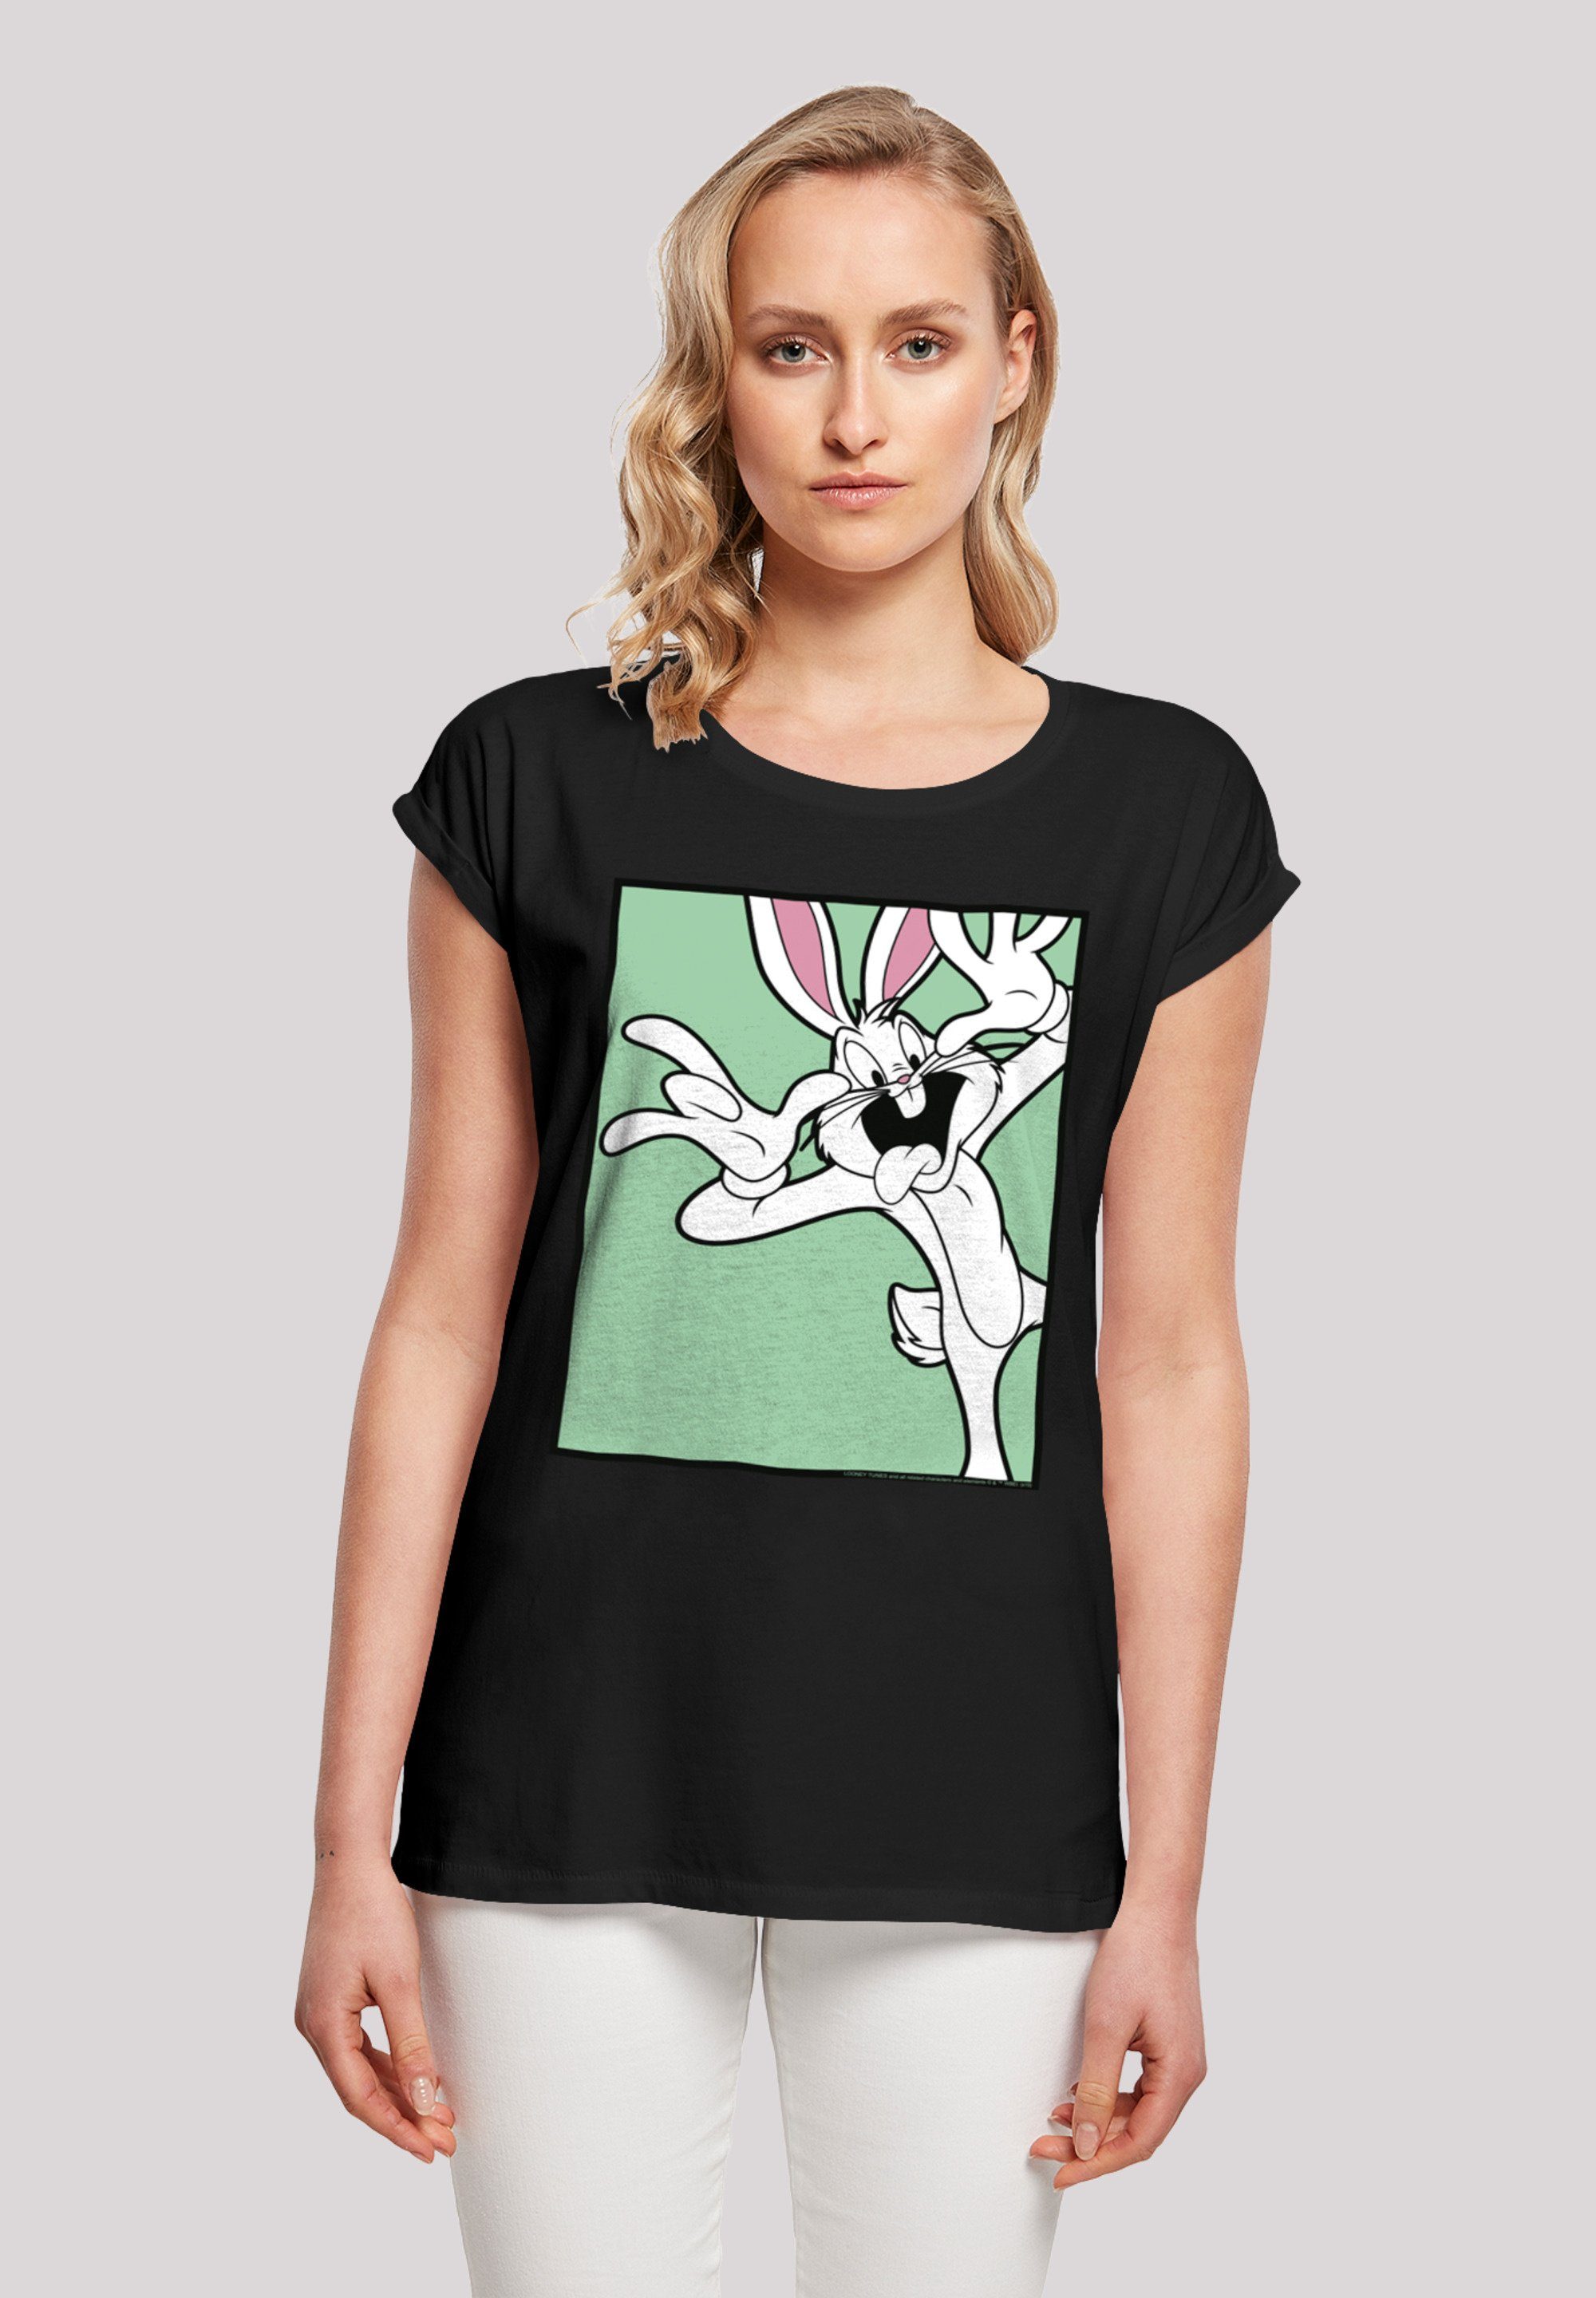 F4NT4STIC T-Shirt Looney Tunes Bugs Bunny Funny Face Print, Sehr weicher  Baumwollstoff mit hohem Tragekomfort | T-Shirts